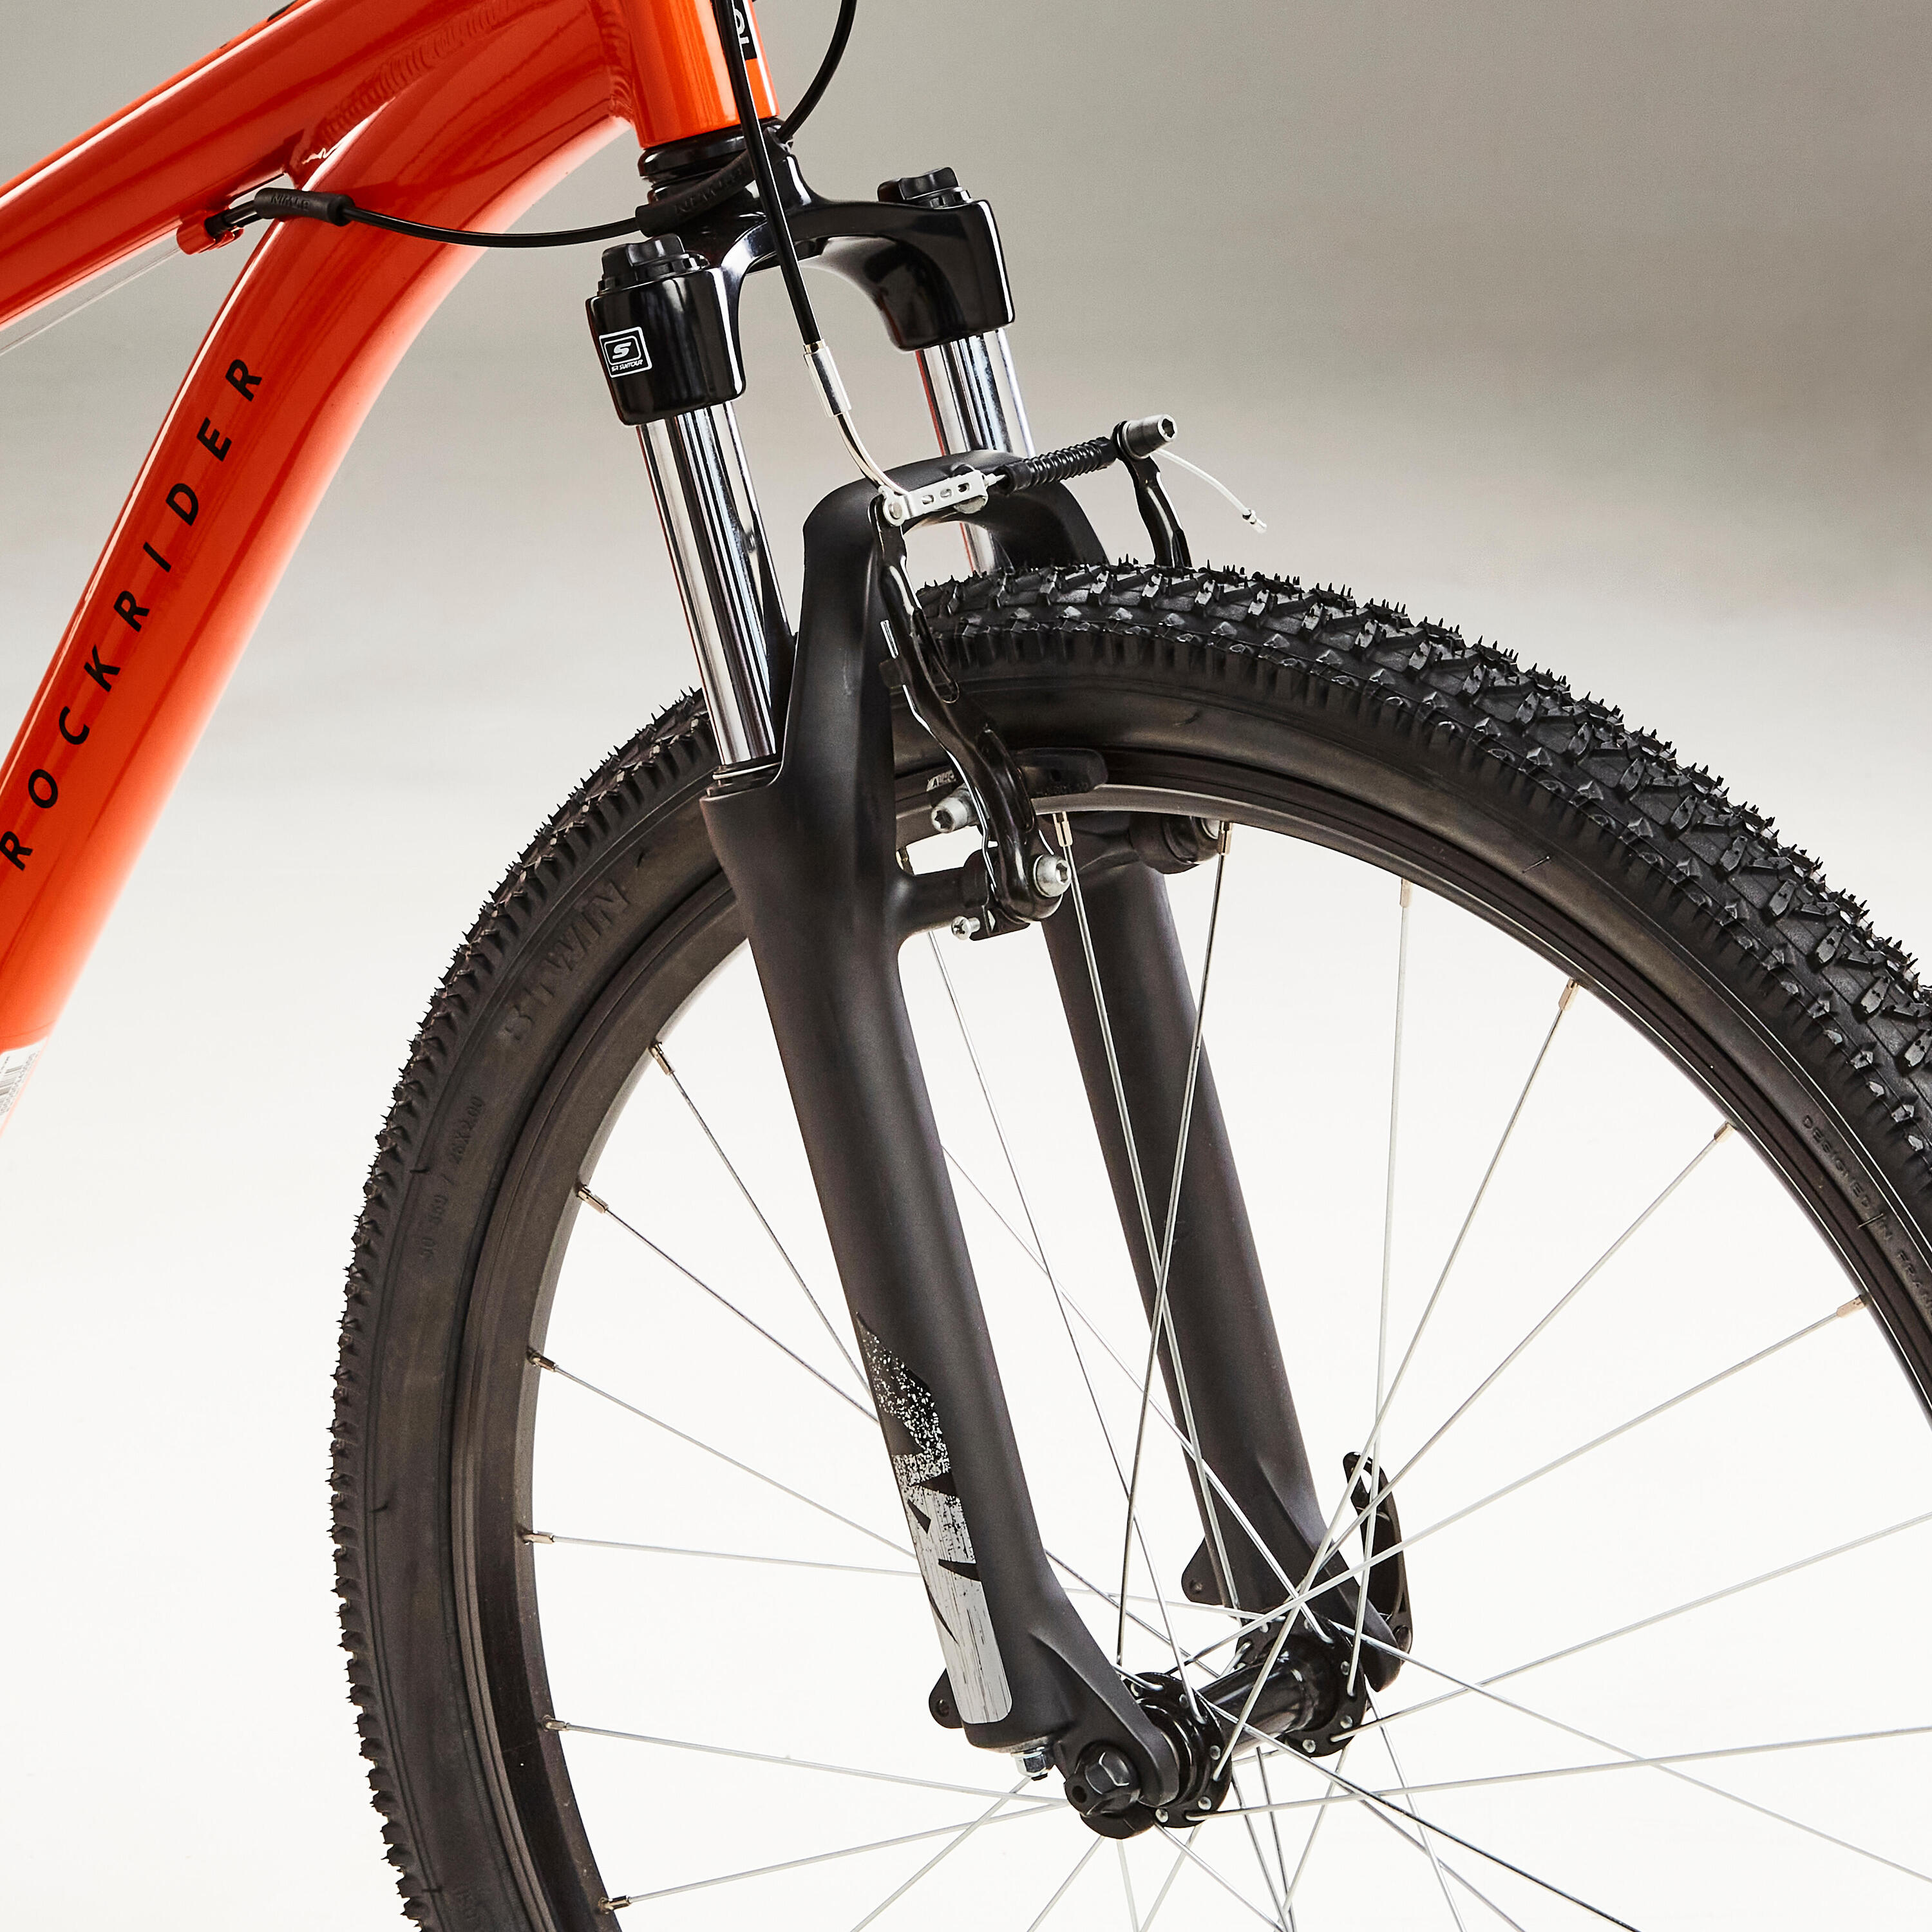 Kids' 26-inch lightweight aluminium mountain bike, orange 6/12